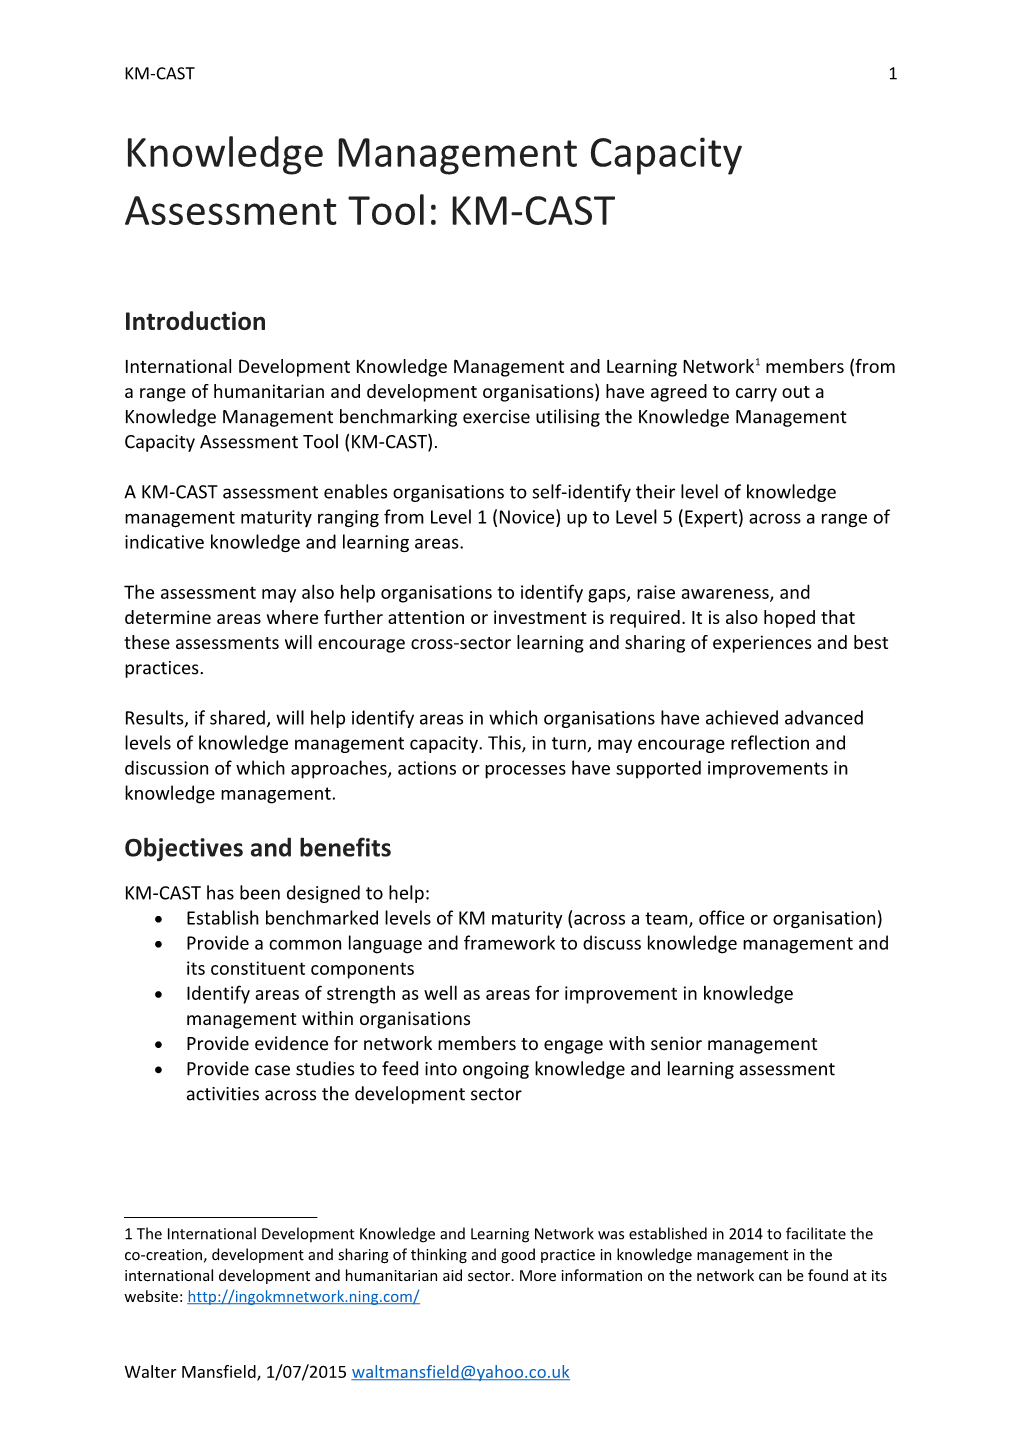 Knowledge Management Capacity Assessmenttool: KM-CAST